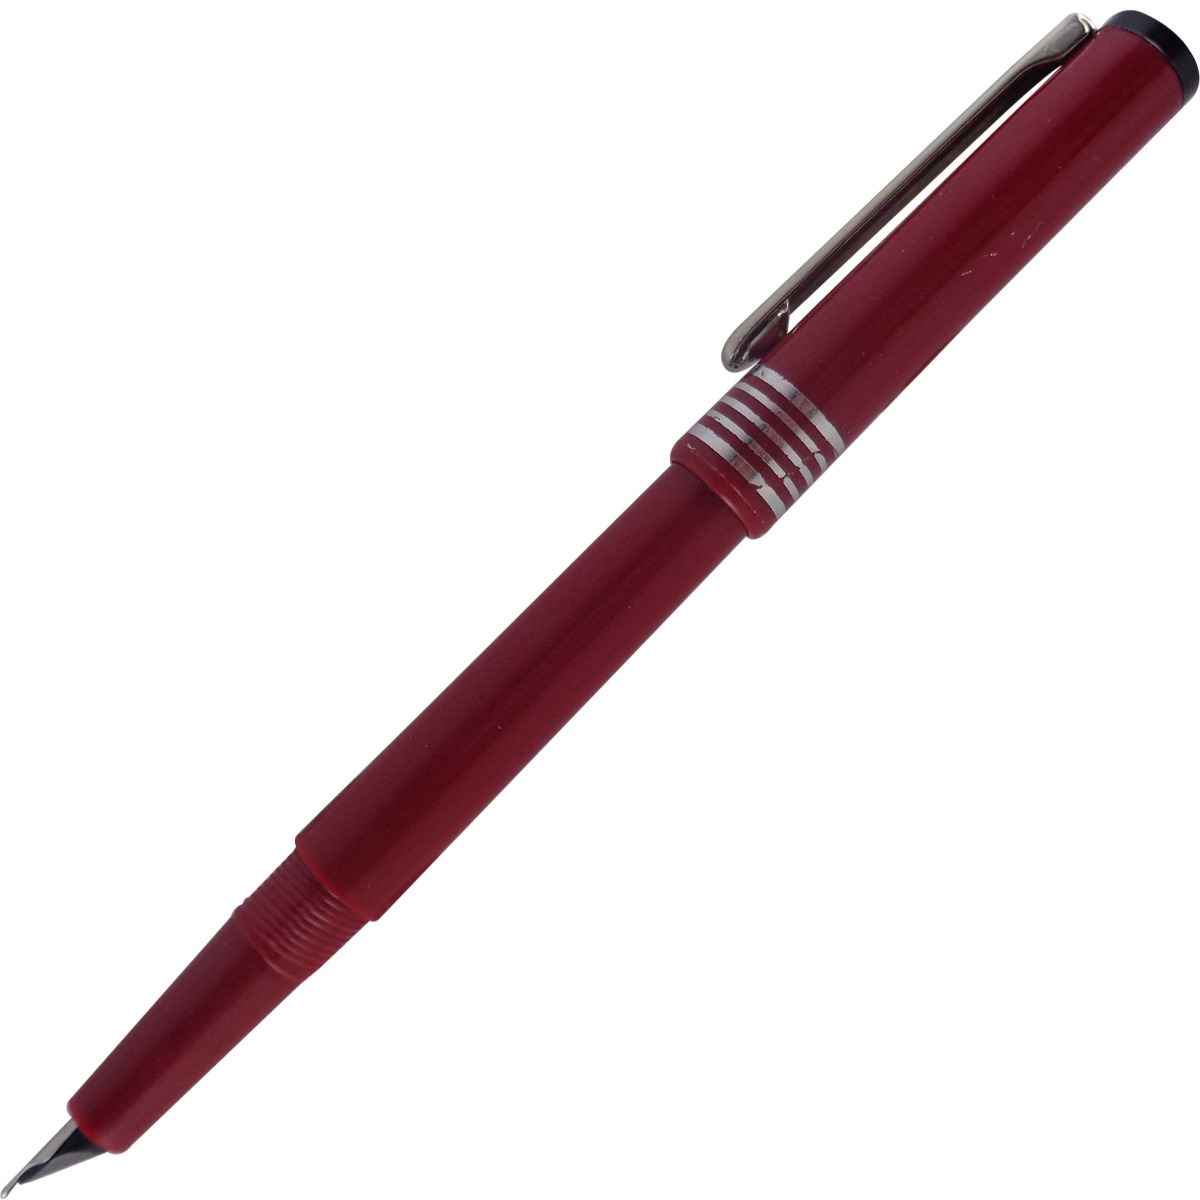 Bril Model: 13672 95 Slim red color body with silver clip cap type  Fine  tip fountain pen